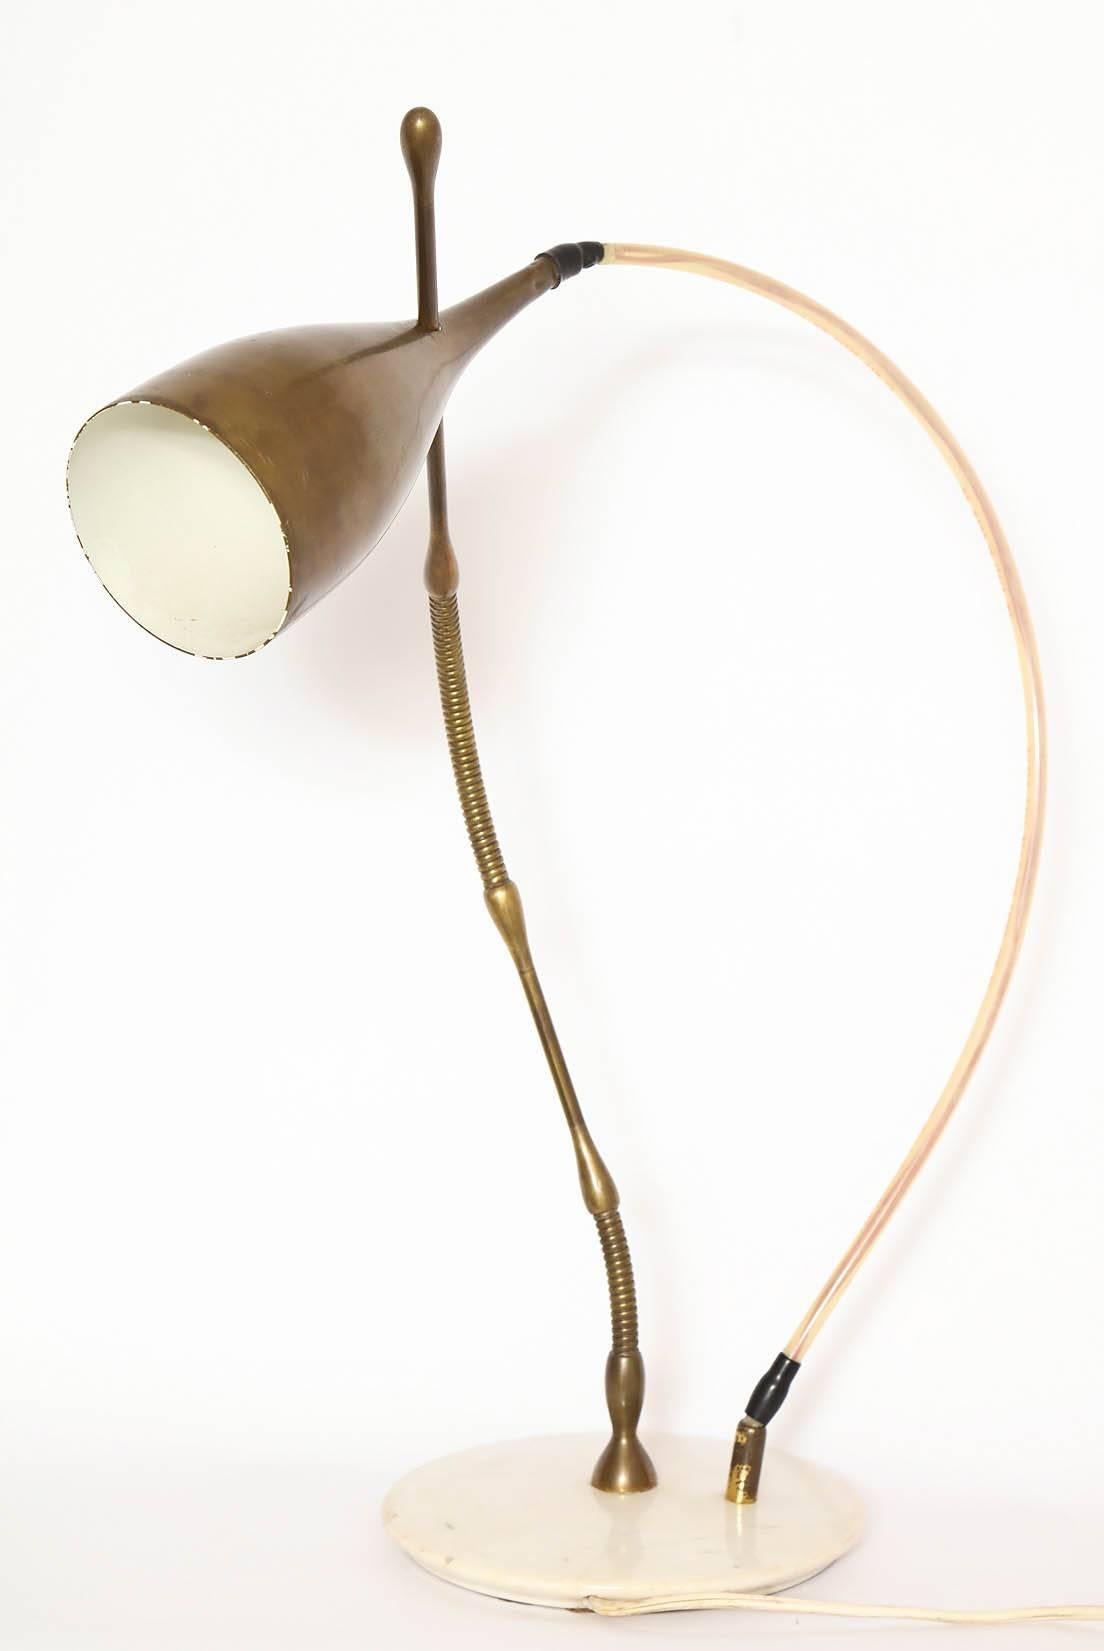 Marble Articulated Table Lamp, Italian, 1950s Unique Rare Design